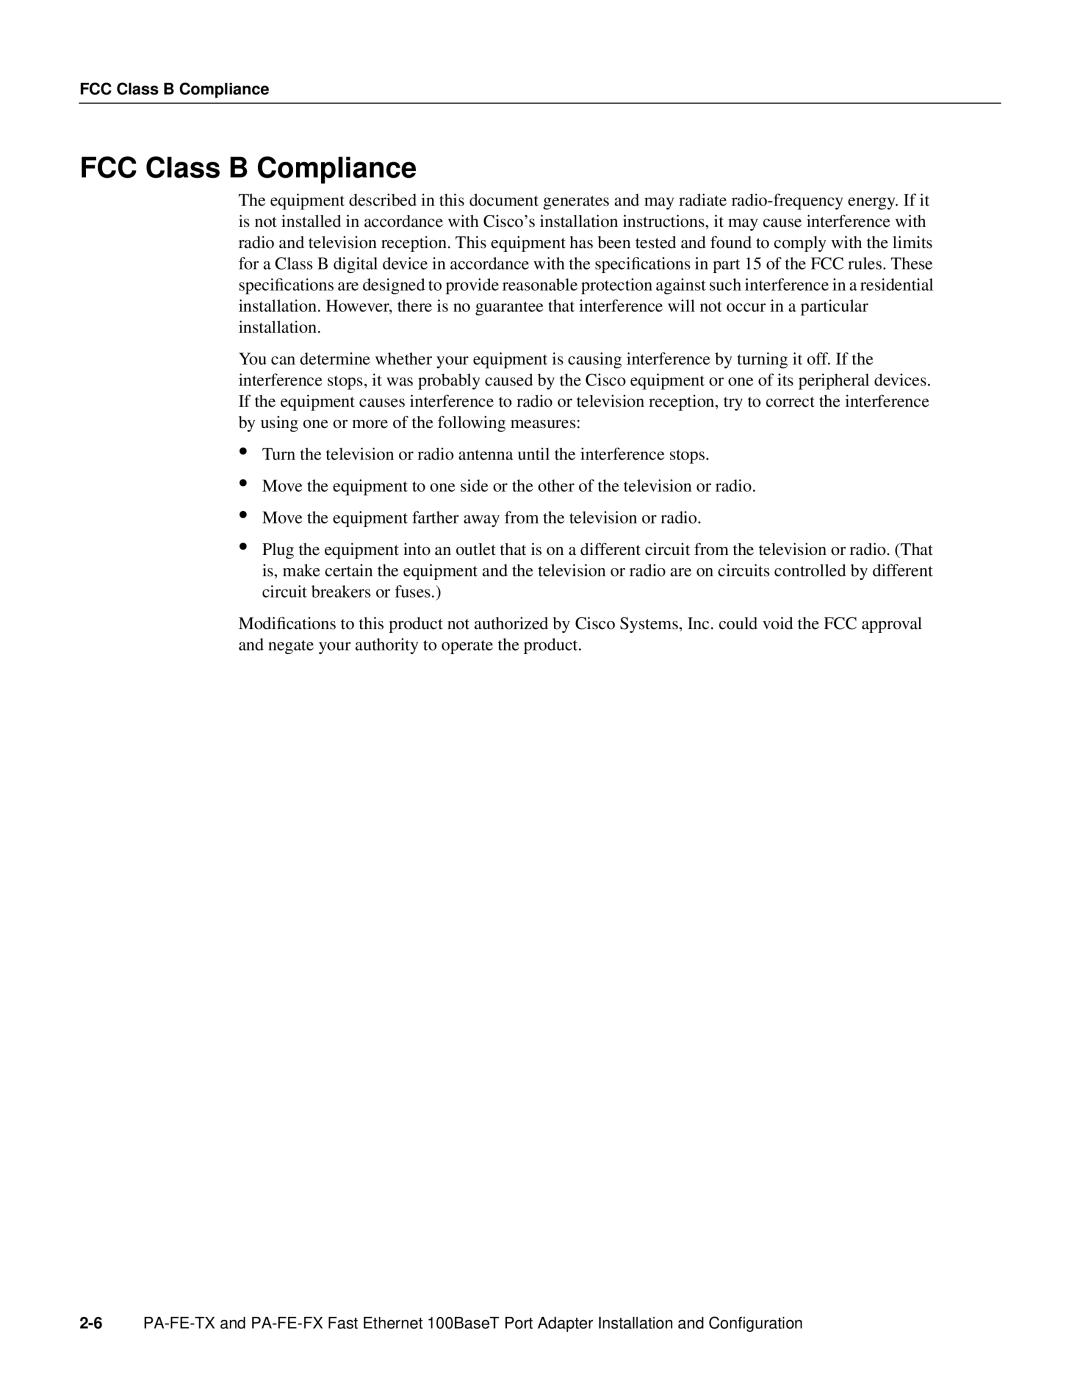 Cisco Systems PA-FE-TX, PA-FE-FX manual FCC Class B Compliance 